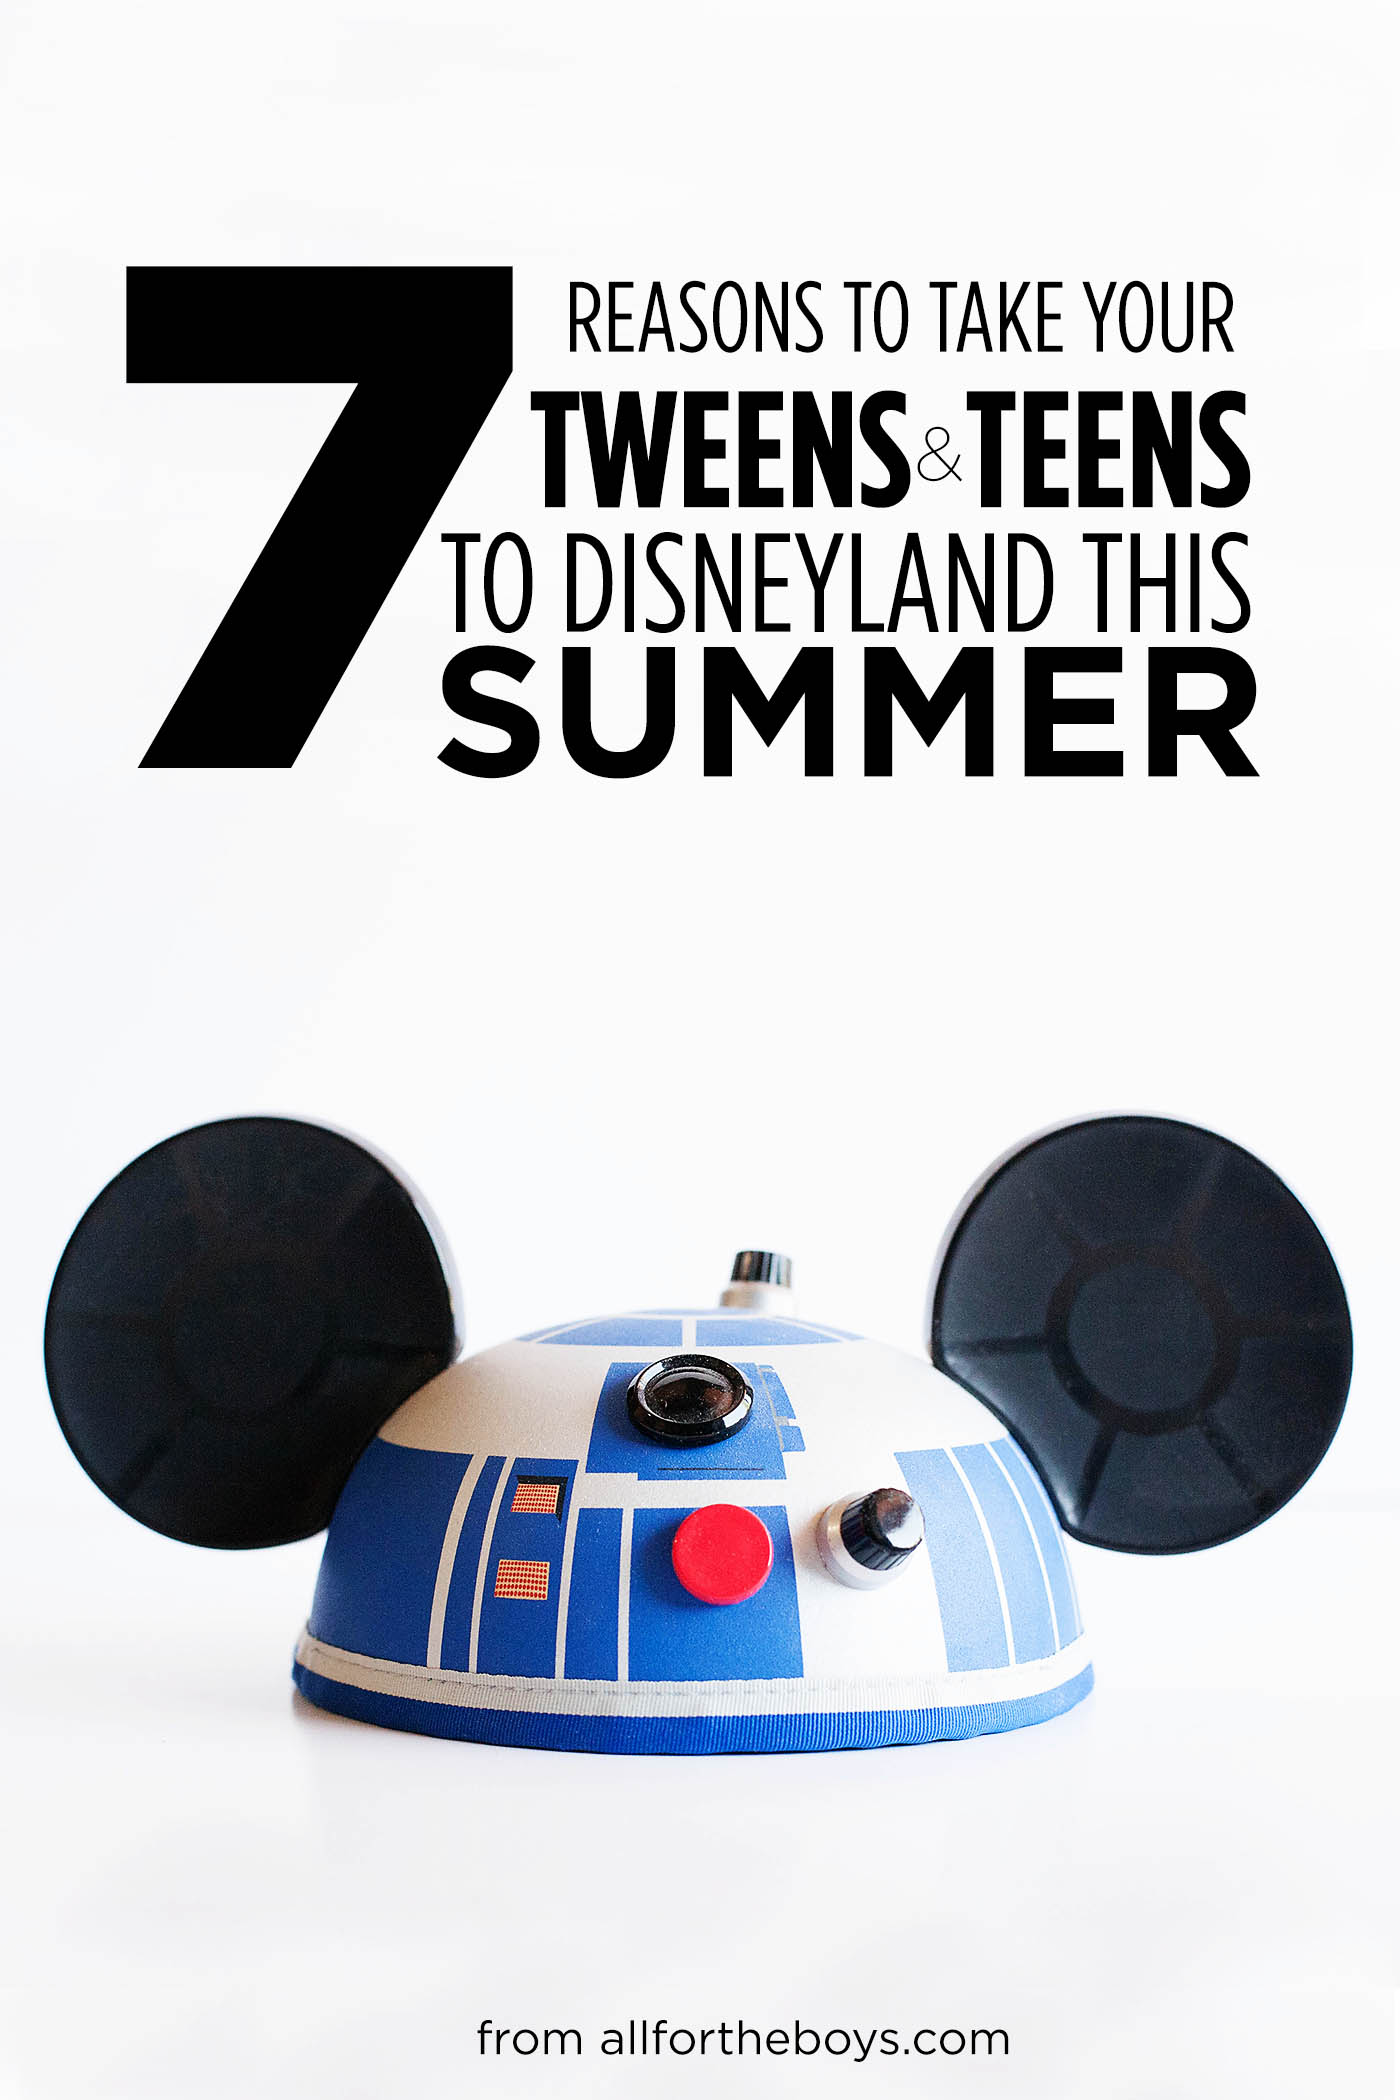 7 Reasons to take your tweens & teens to Disneyland THIS Summer!